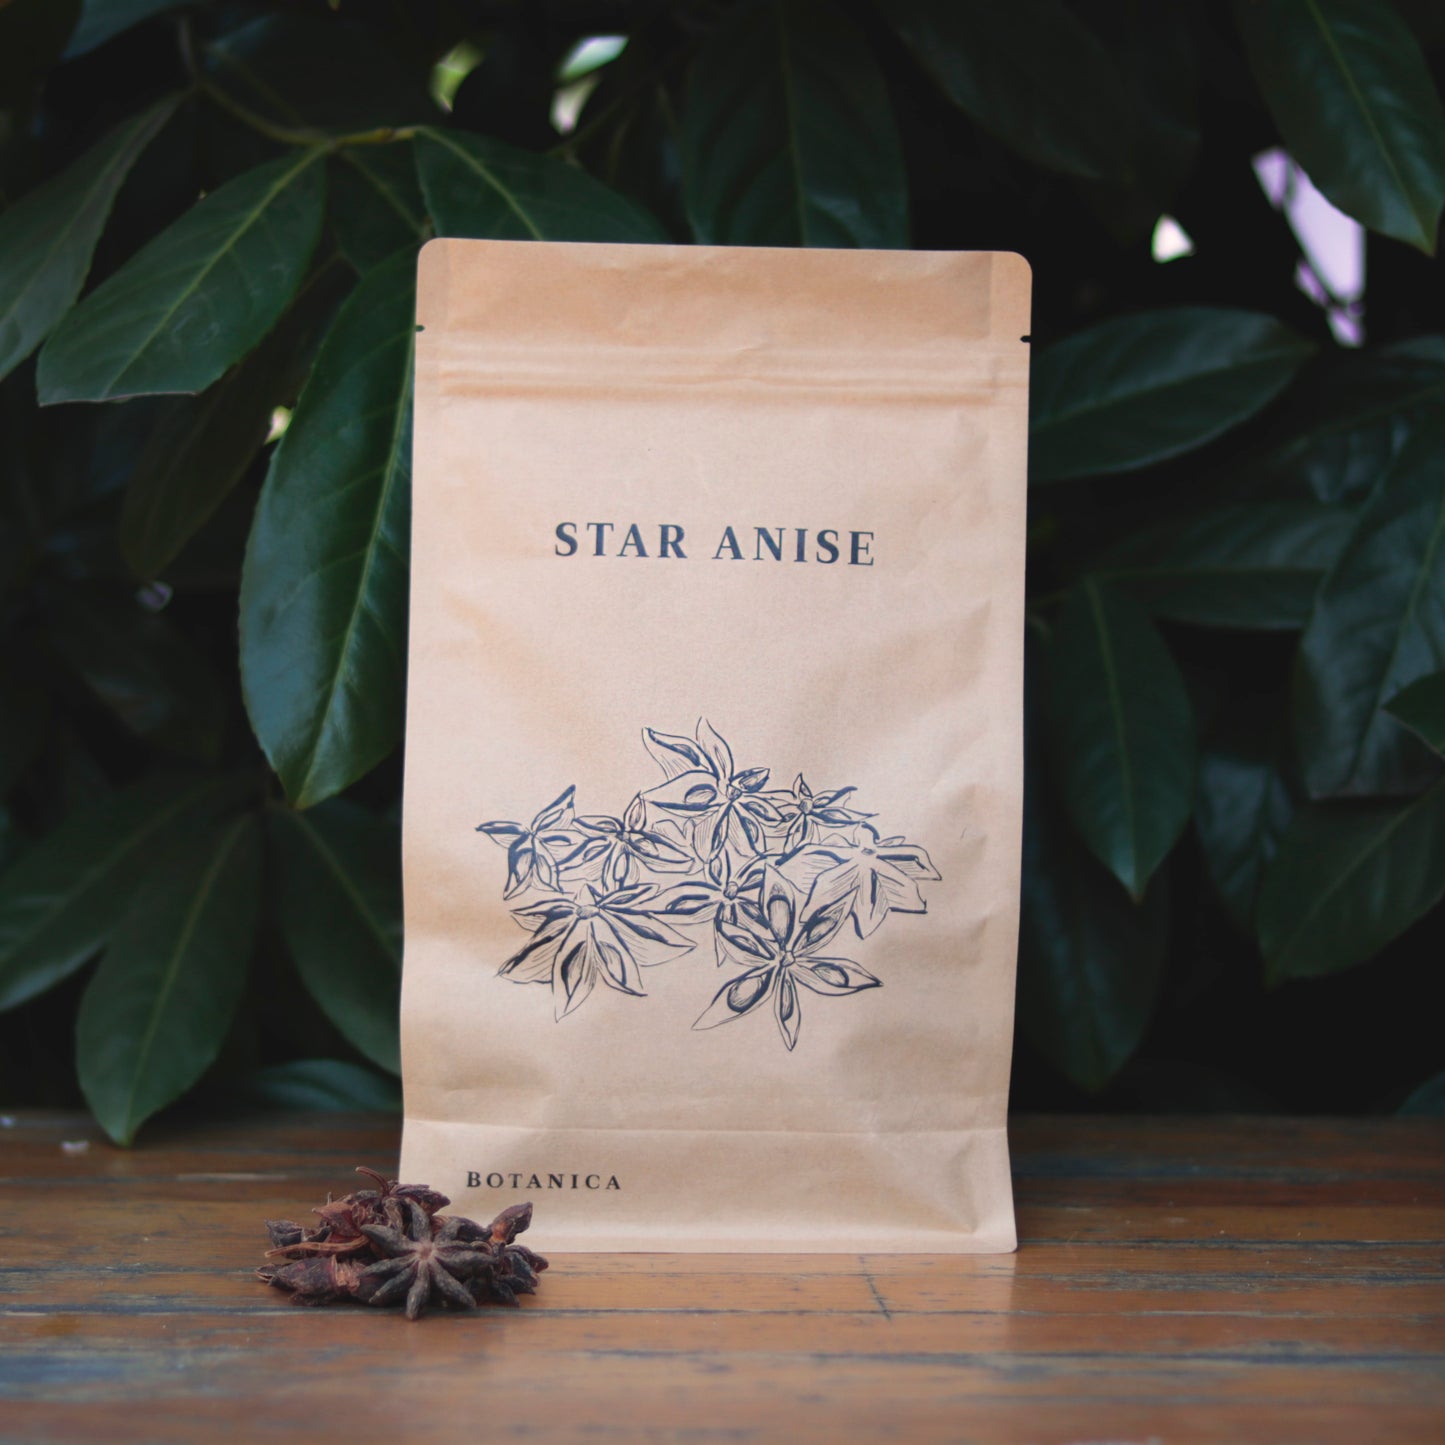 Botany - Star Anise